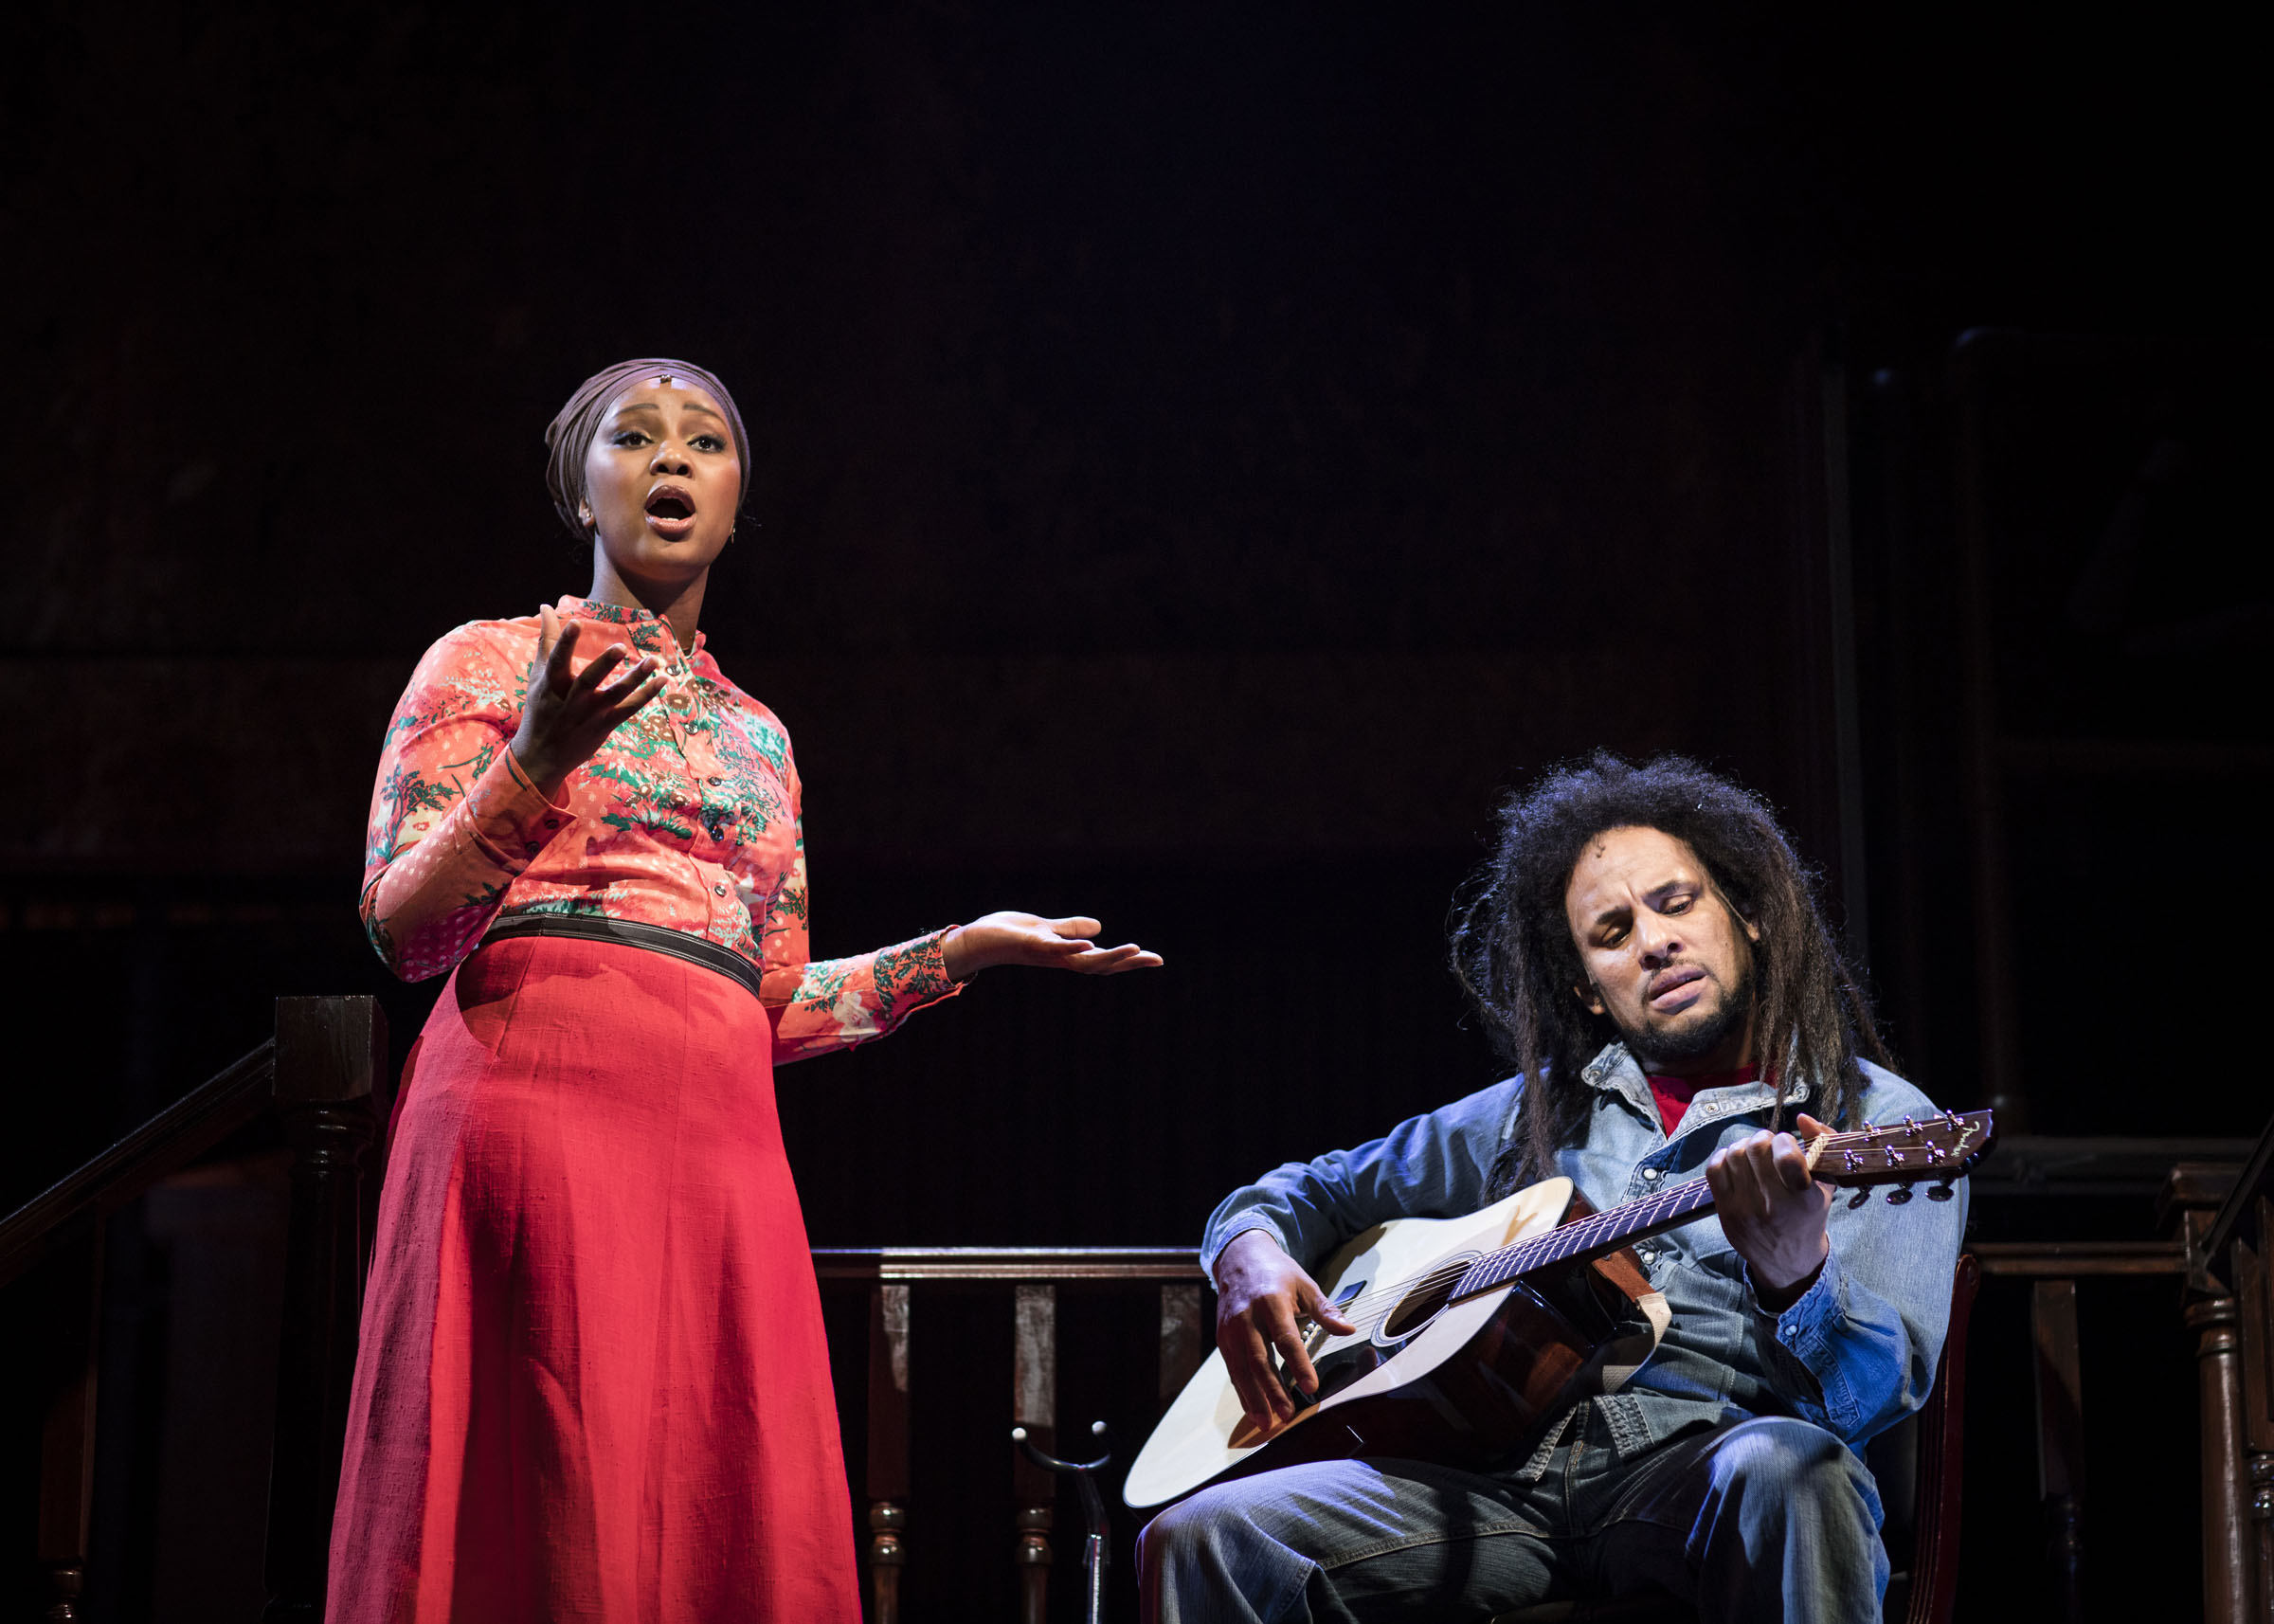 Alexia Khadime as Rita Marley with Mitchell Brunings as her husband Bob Marley